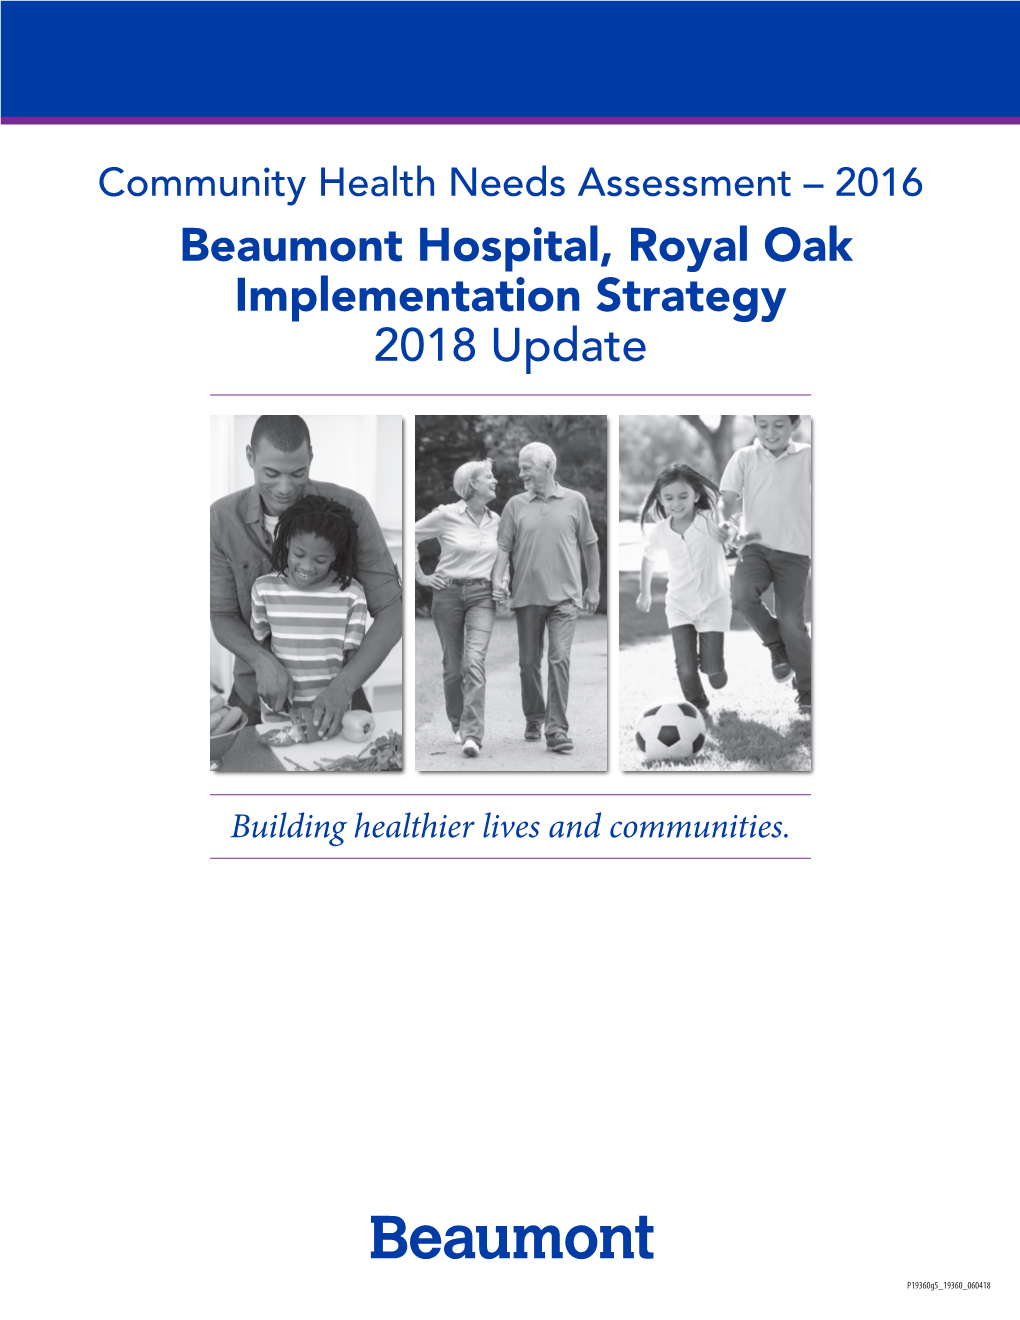 Beaumont Hospital, Royal Oak Implementation Strategy 2018 Update